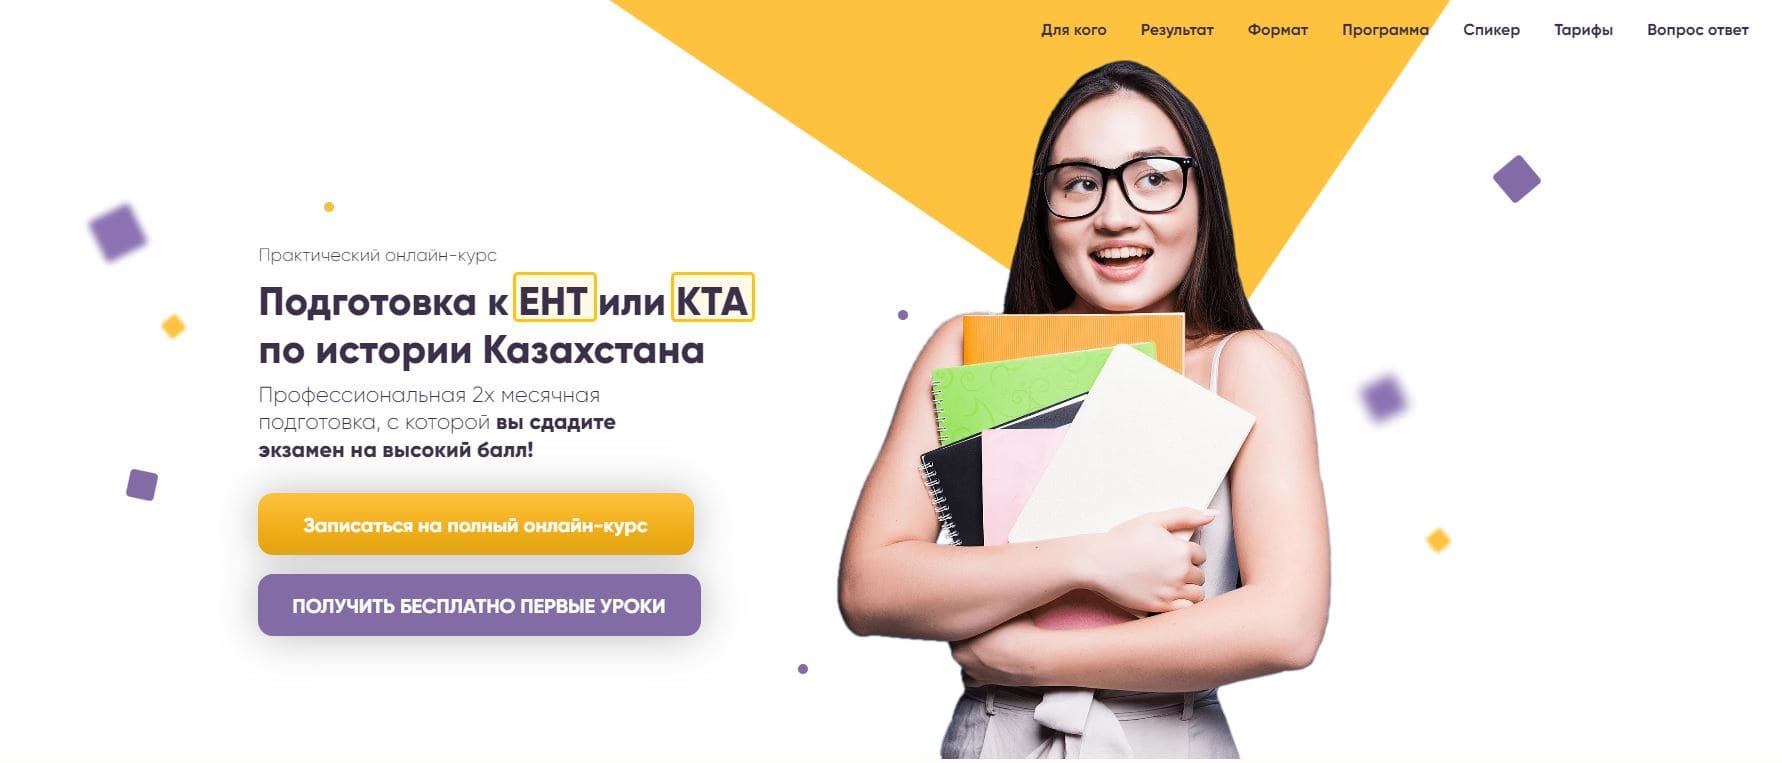 Ent1.kz – официальный сайт